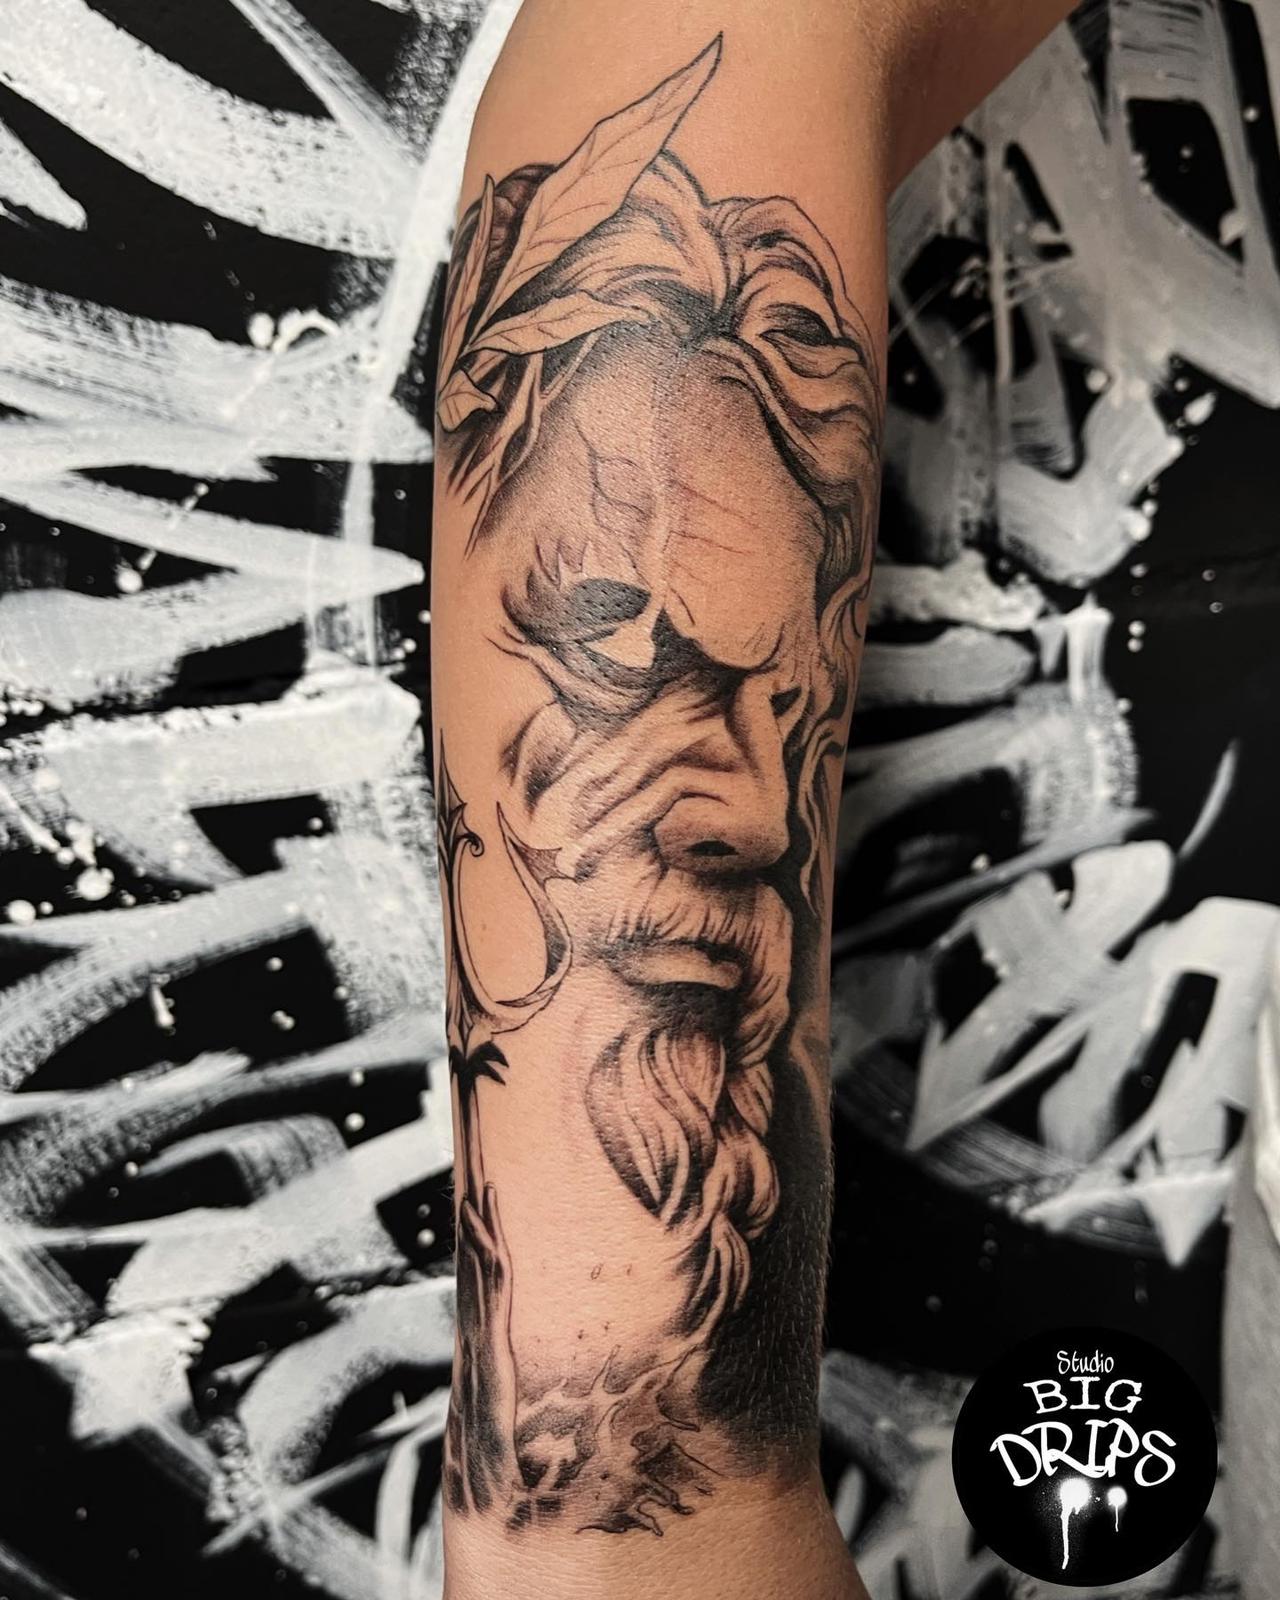 Bigdrips Tattoo Studio Artist Petro 